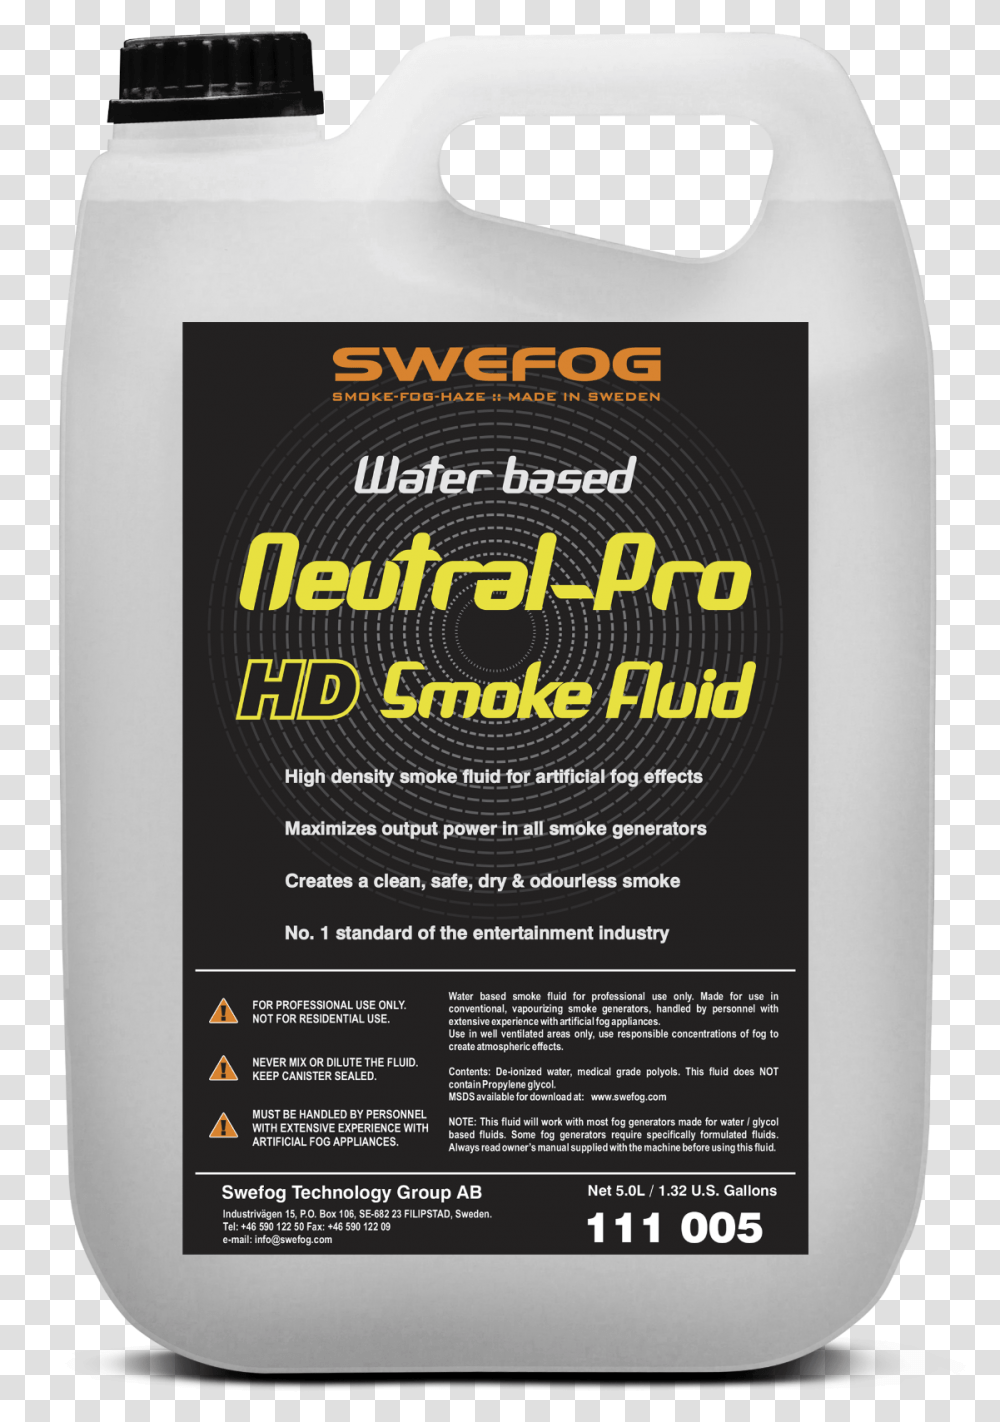 Neutral Pro Hd Smoke Fluid High Quality Fog Fluidsmoke Fluid, Label, Bottle, Poster Transparent Png